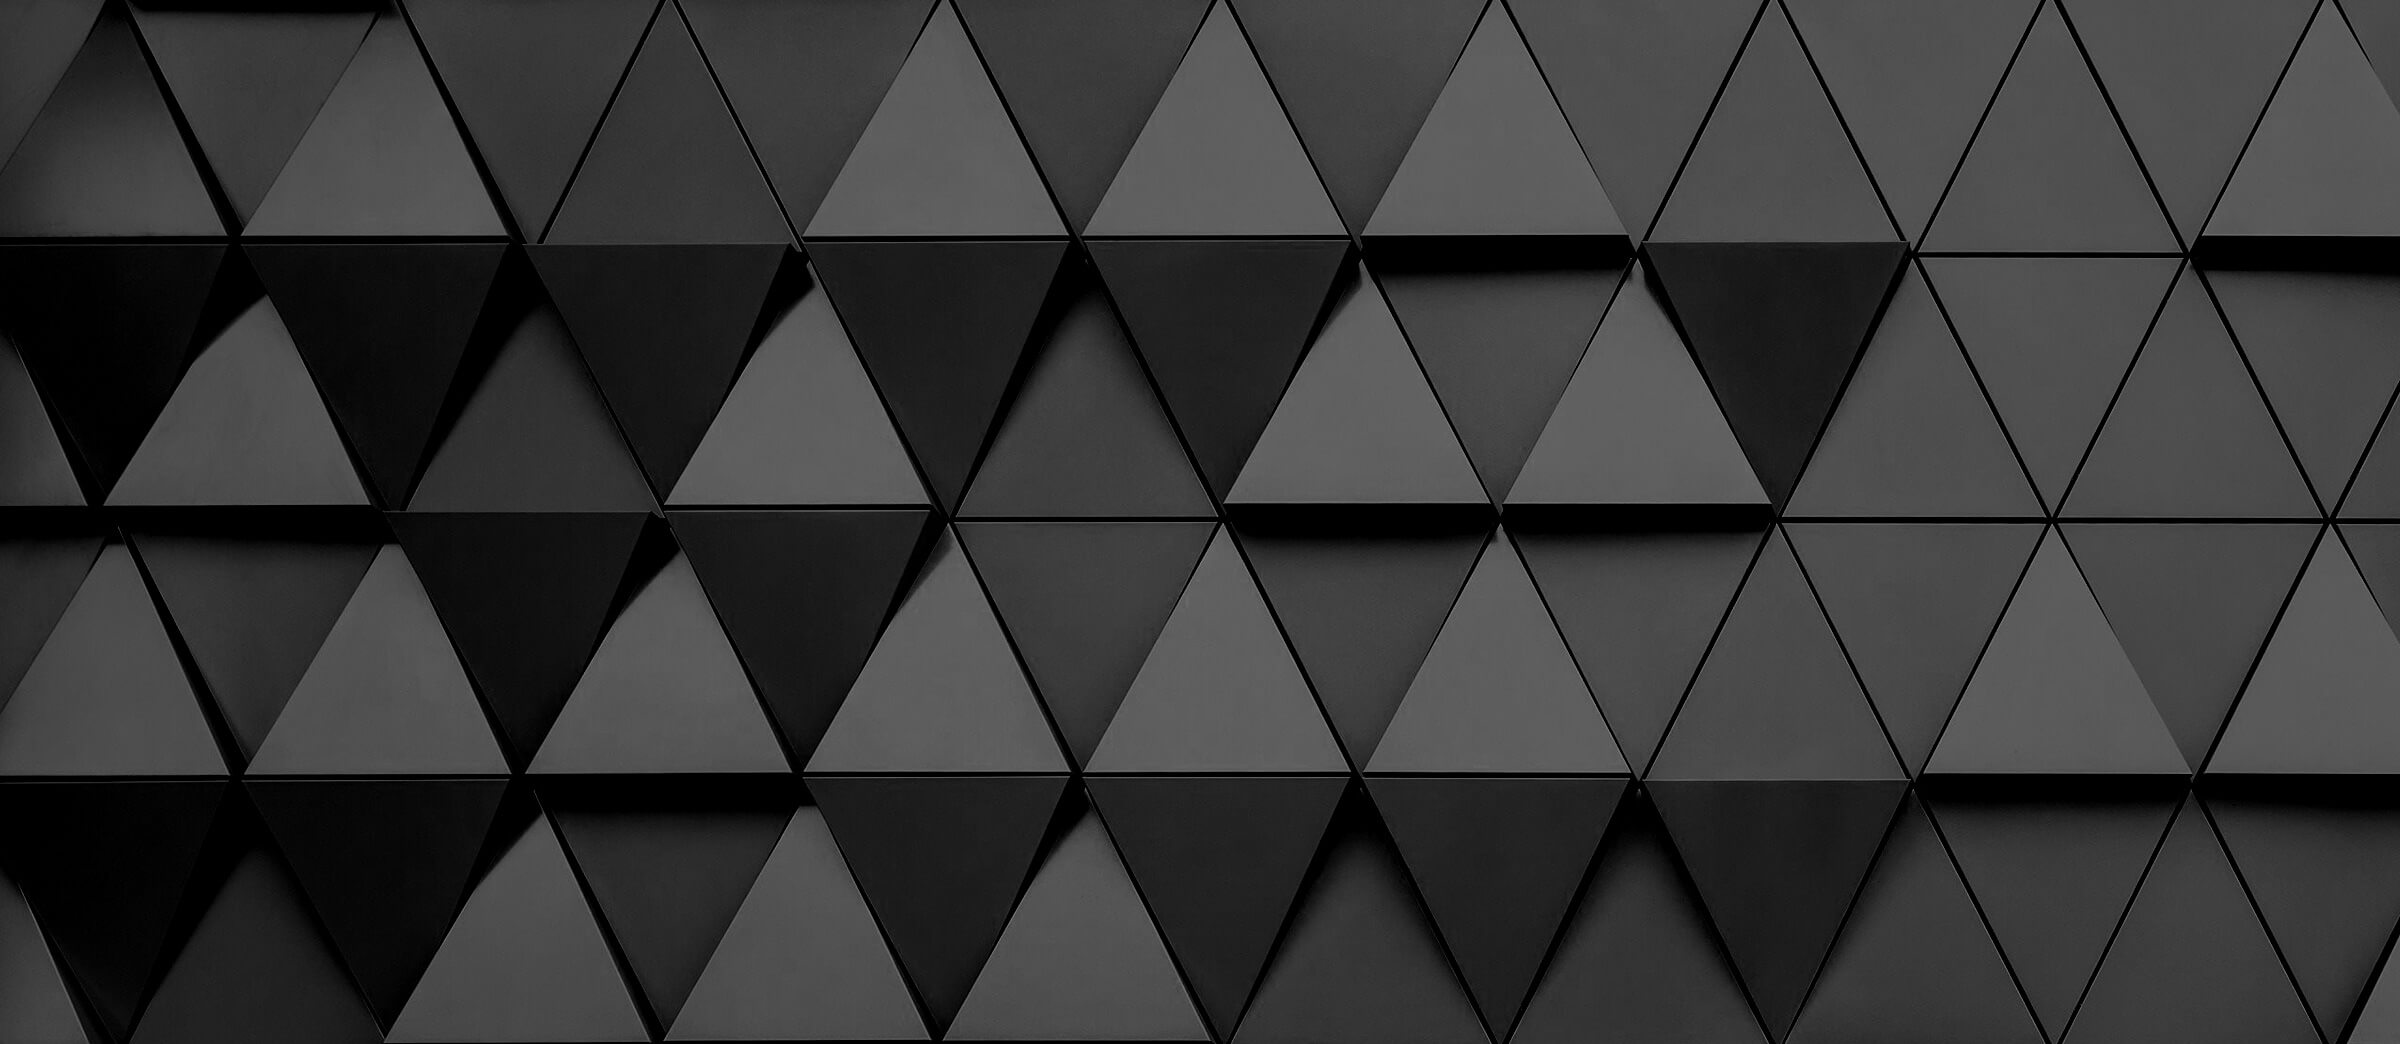 Black Geometric background